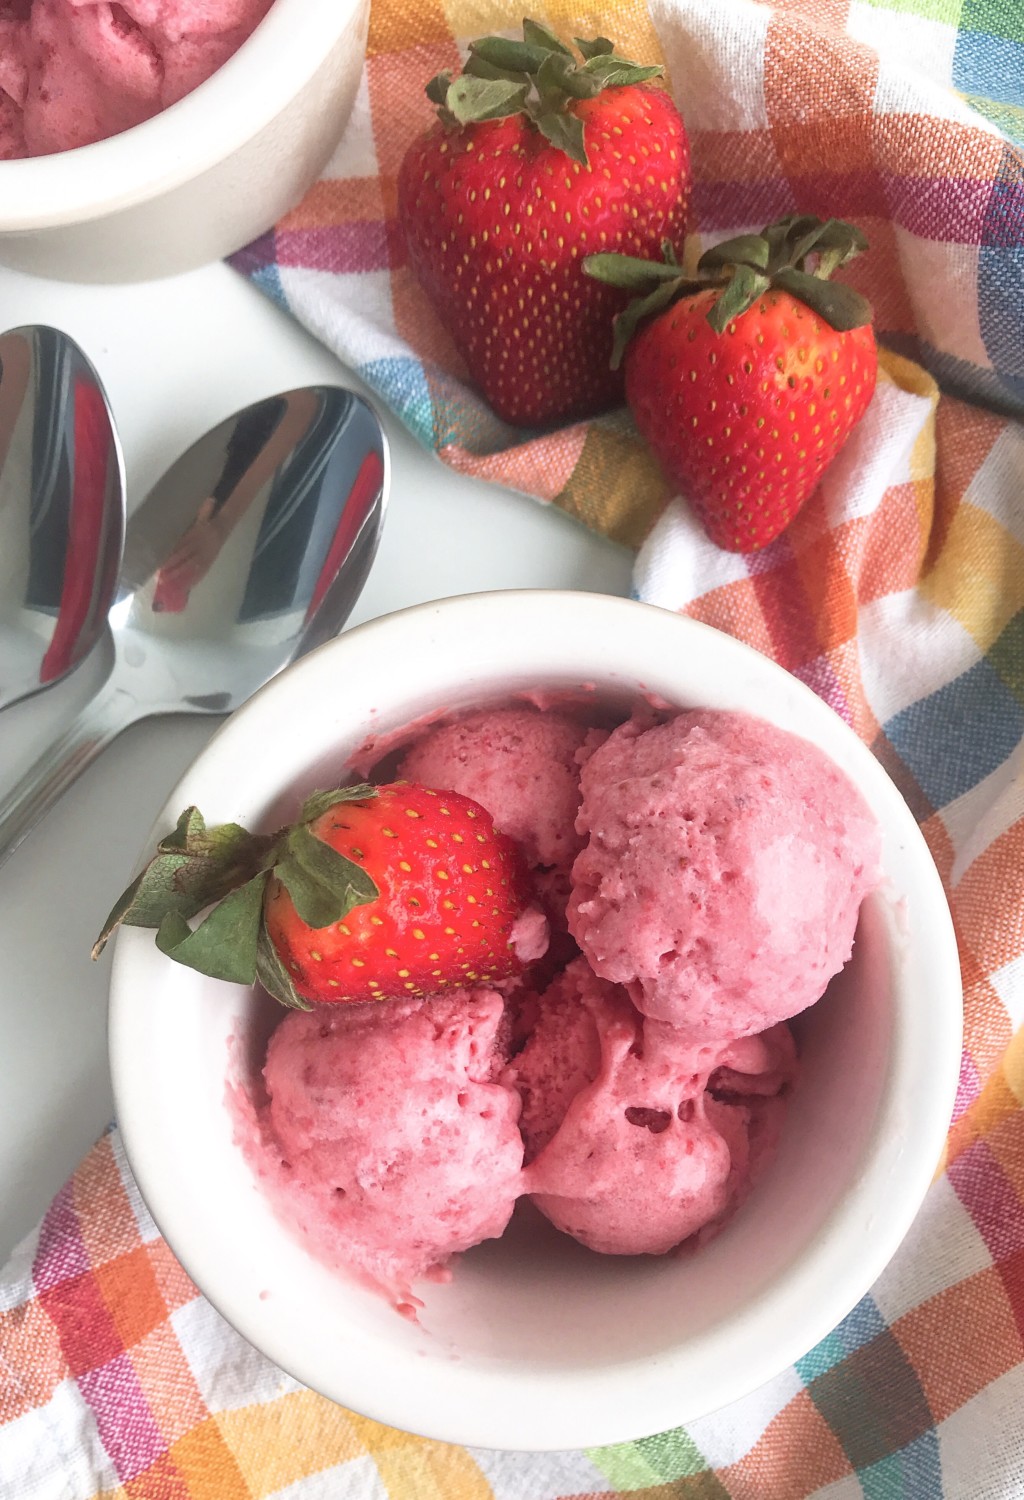 Image: A bowl of homemade dairy-free, gluten-free strawberry ice cream